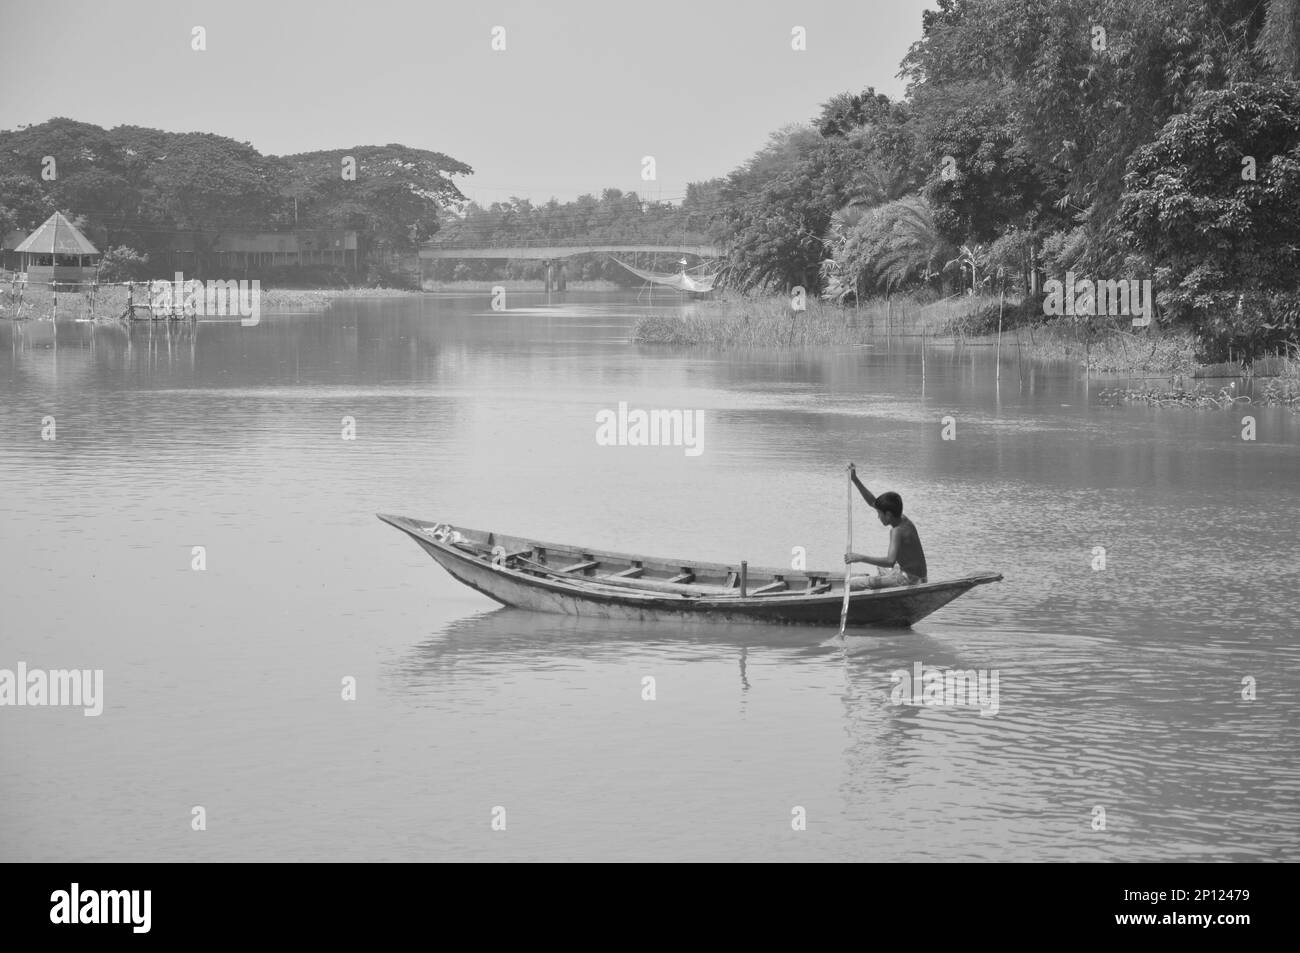 Rural side boat on the river scene in Bangladesh. Stock Photo